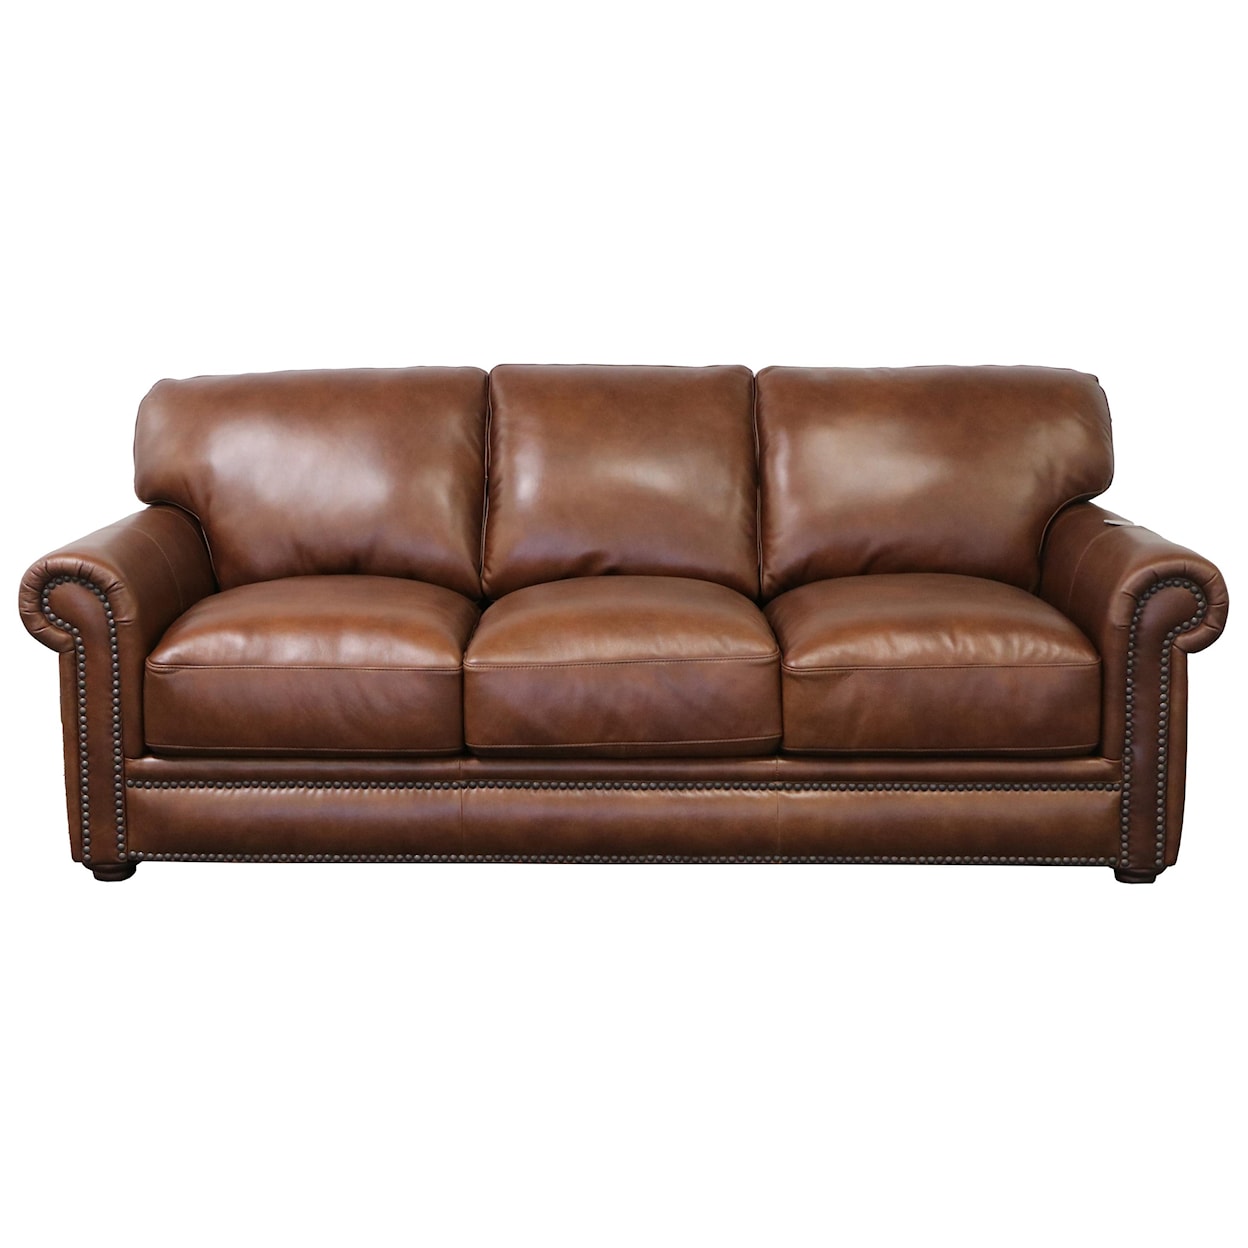 Futura Leather Derrick Chestnut Leather Sofa